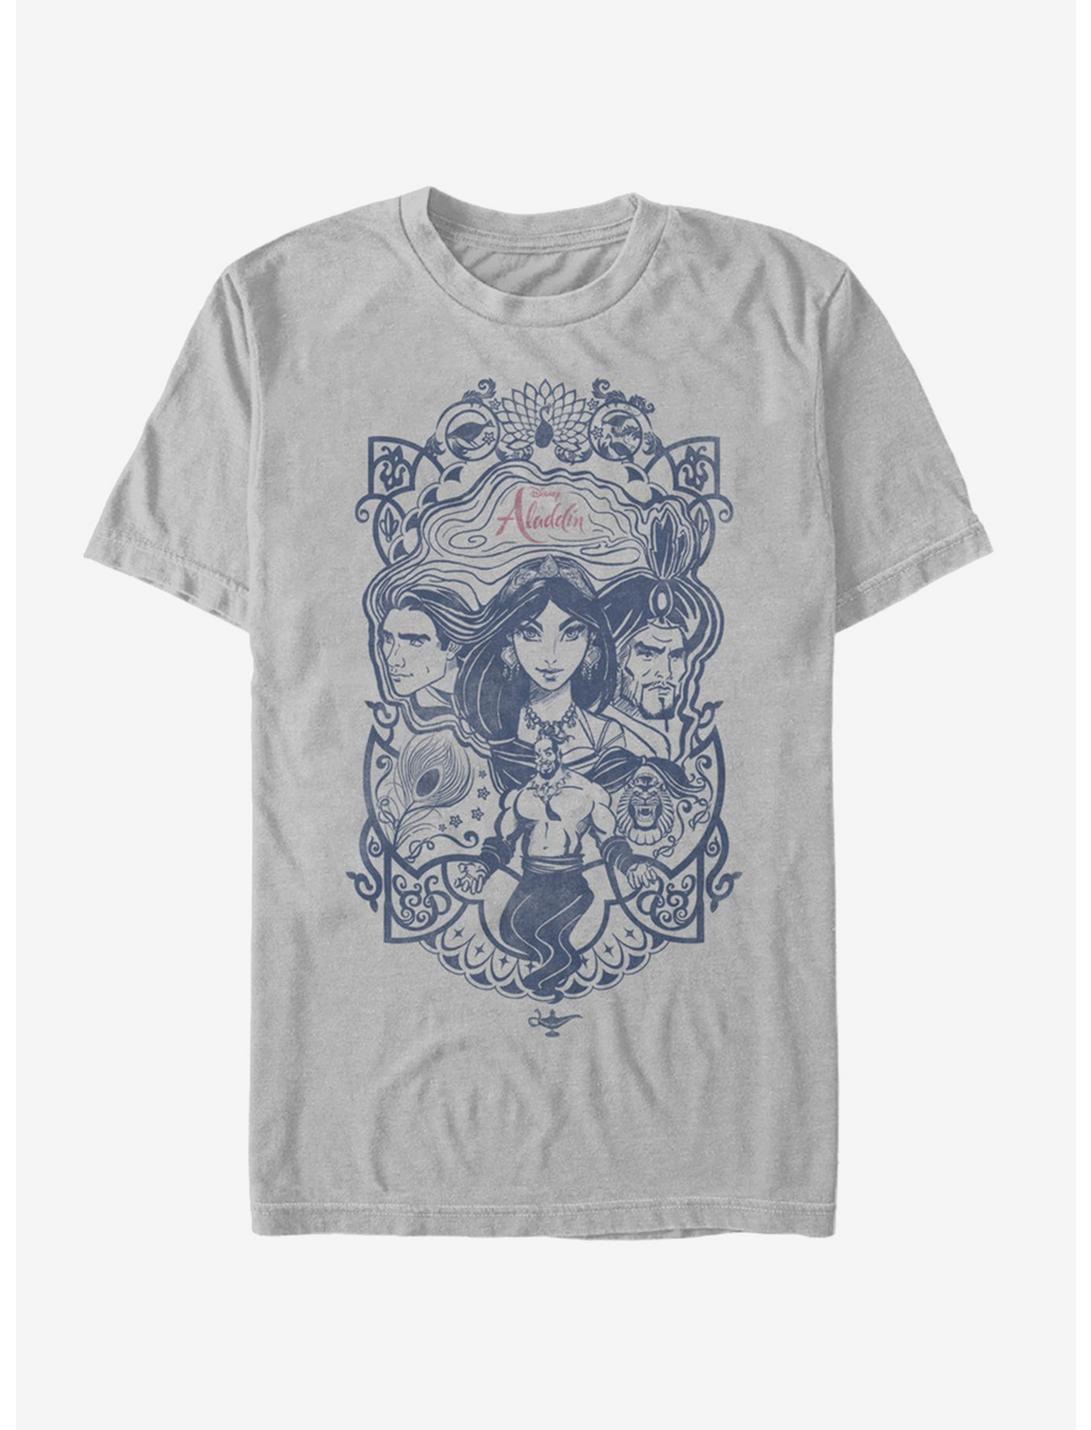 Disney Aladdin 2019 Vintage Aladdin Collage T-Shirt, SILVER, hi-res